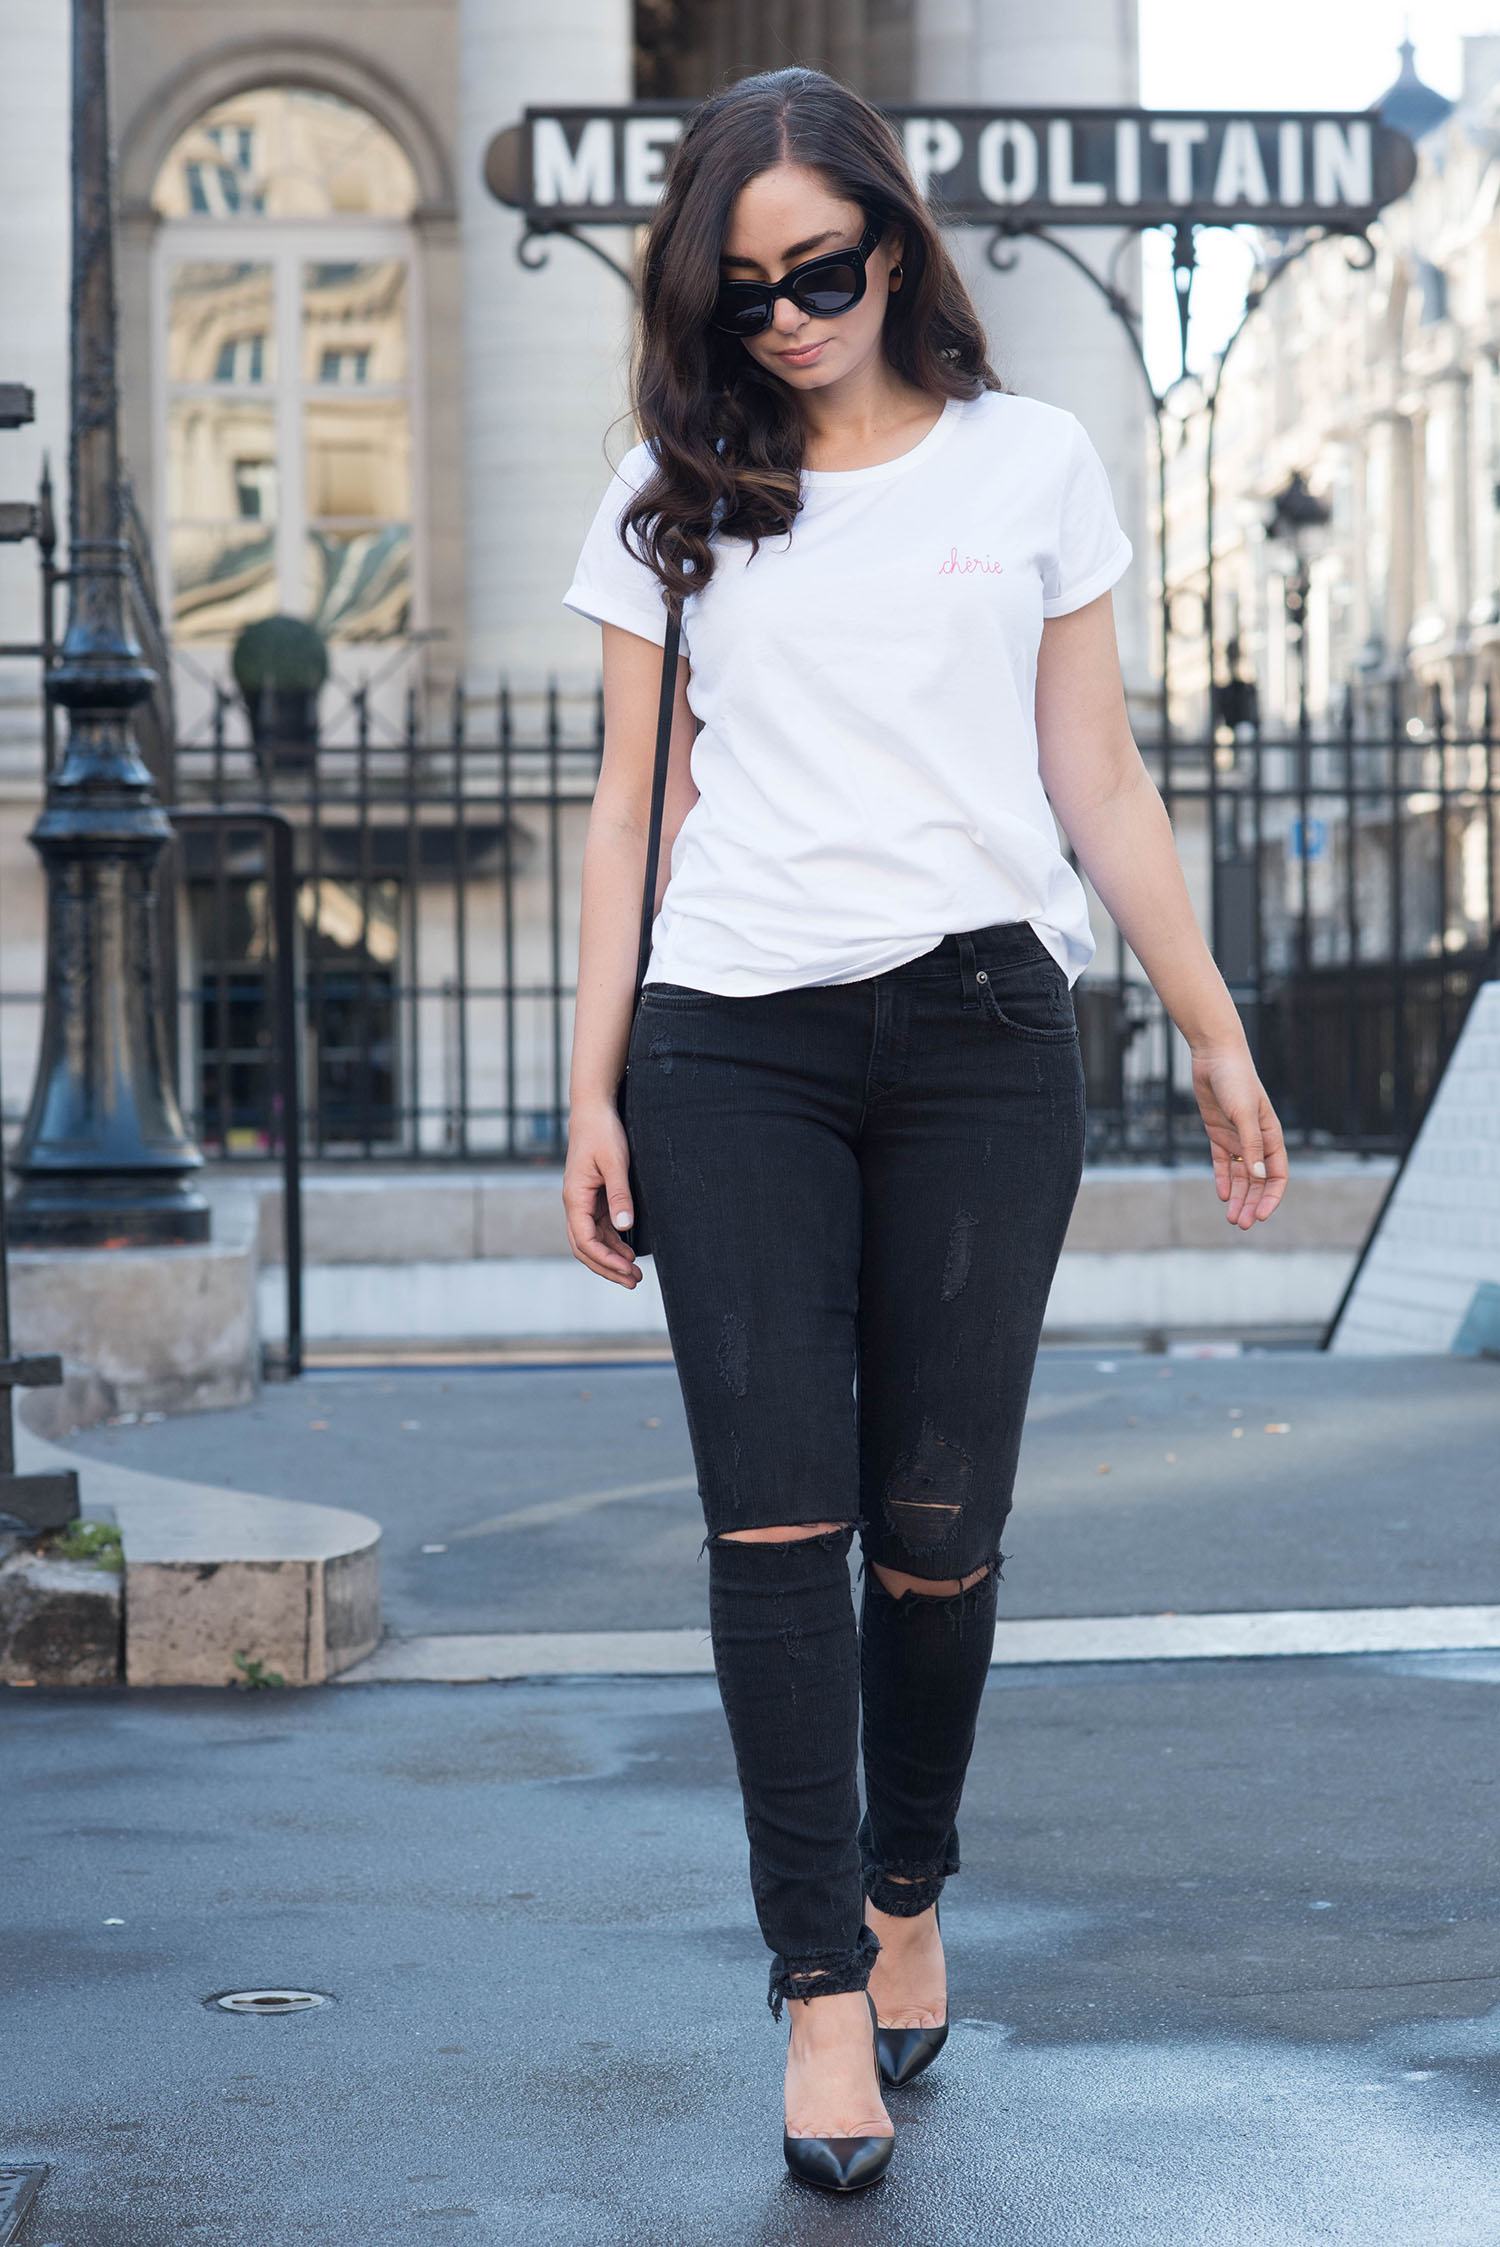 Winnipeg fashion blogger Cee Fardoe of Coco & Vera walks through Paris wearing a Maison Labiche tee, Lovers + Friends jeans and Christian Louboutin Pigalle pumps